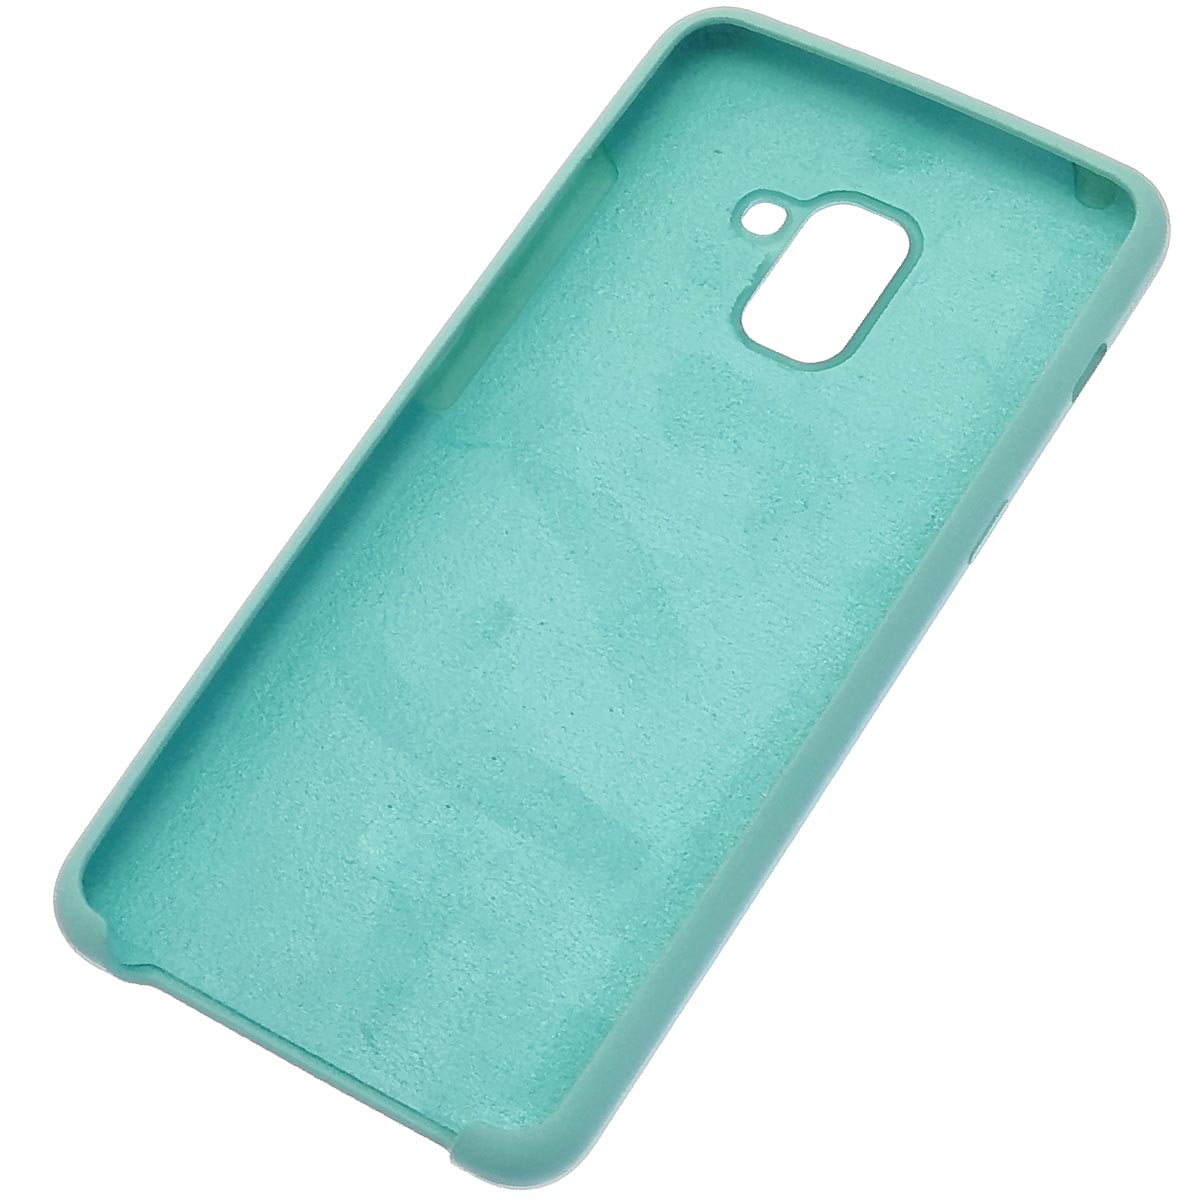 Чехол накладка Silicon Cover для SAMSUNG Galaxy A8 Plus (SM-A730F), силикон, бархат, цвет цвет бирюзовый